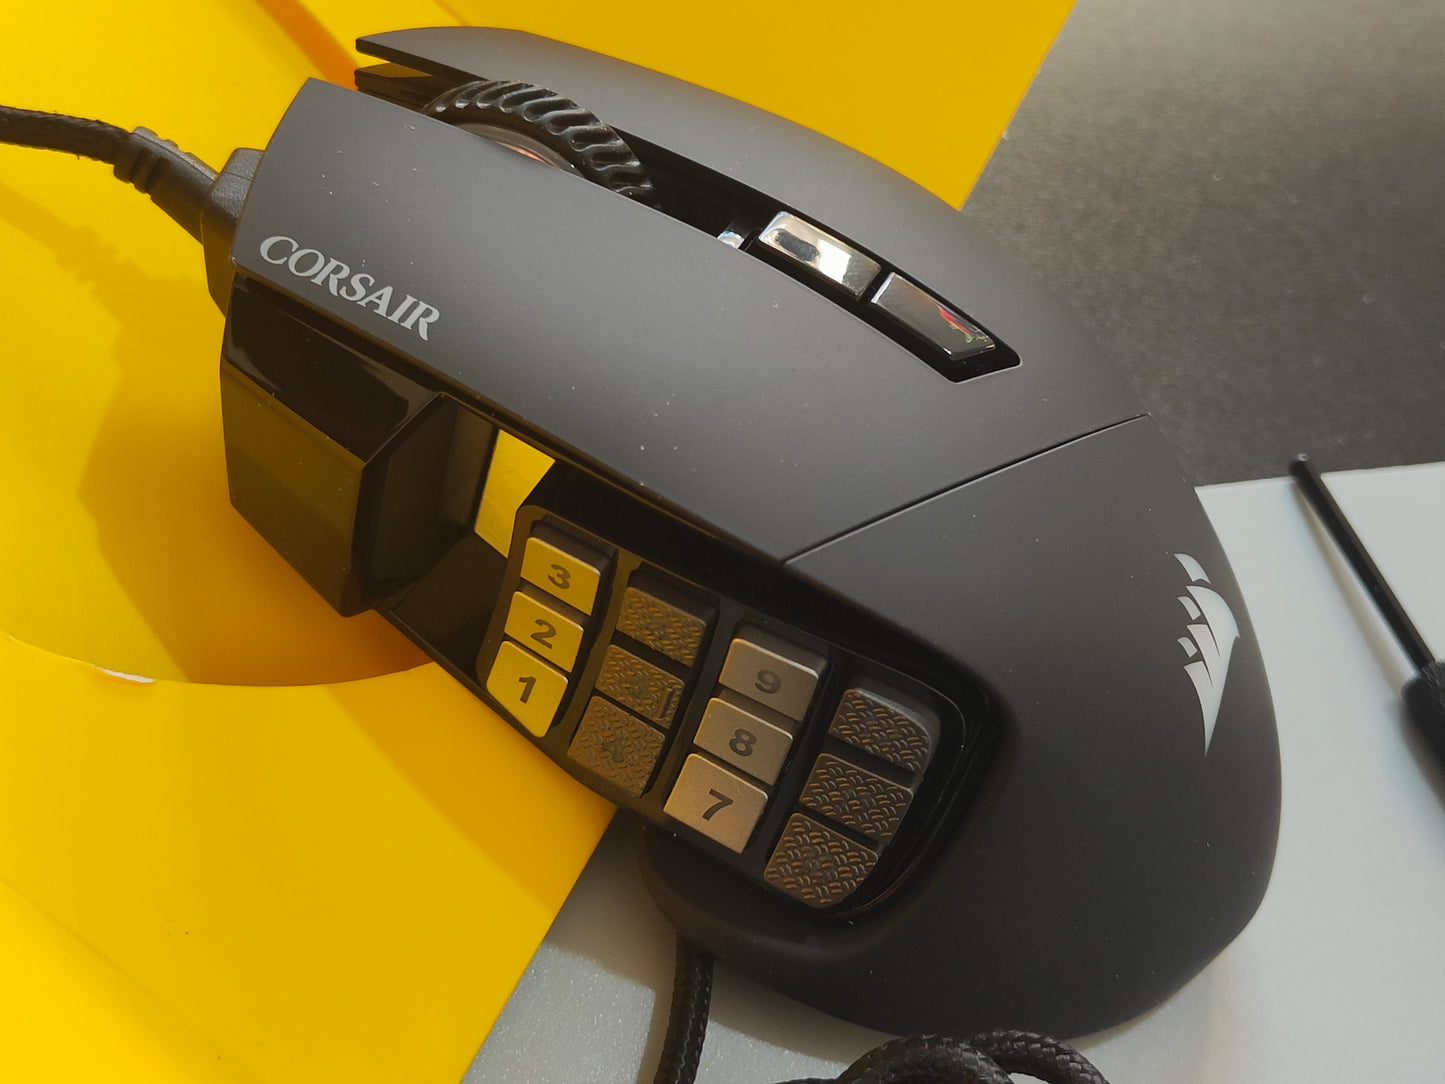 Corsair SCIMITAR RGB ELITE USB Optical MOBA/MMO Gaming Mouse